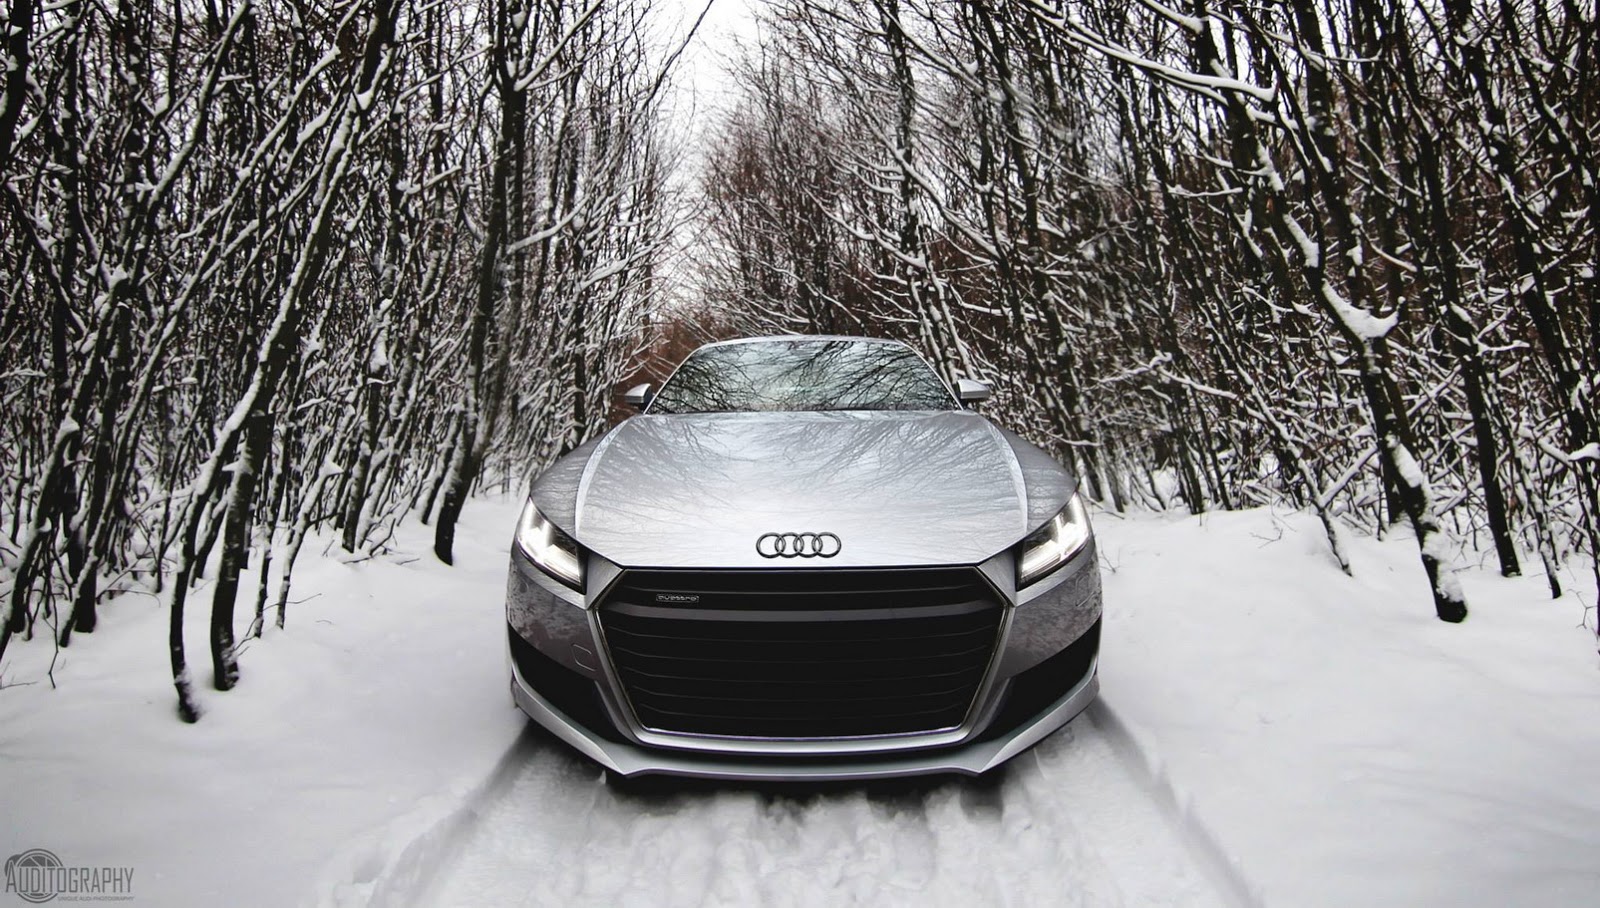 2015 Audi TT Is The Perfect Snow Angel